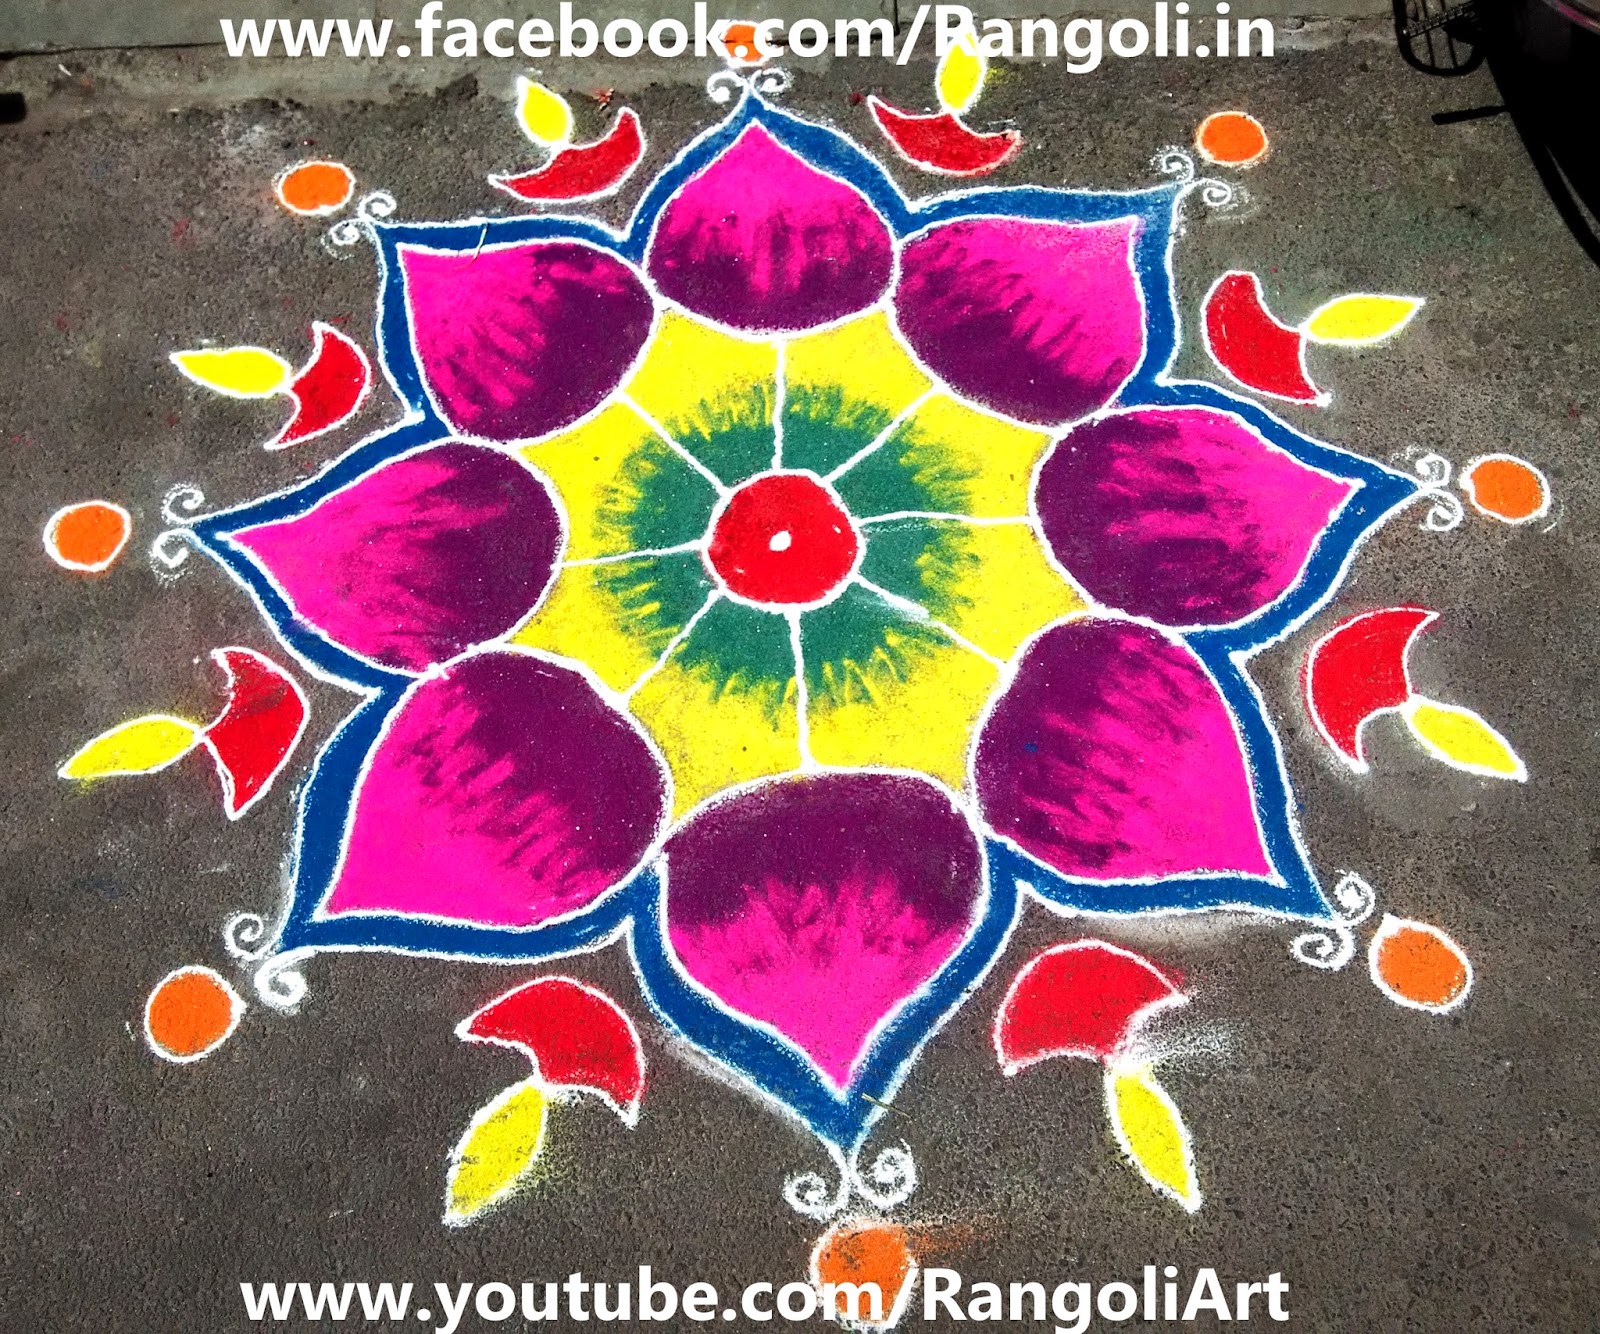 Diwali Rangoli , Kolam , Designs Images: Rangoli images of Diwali 2014